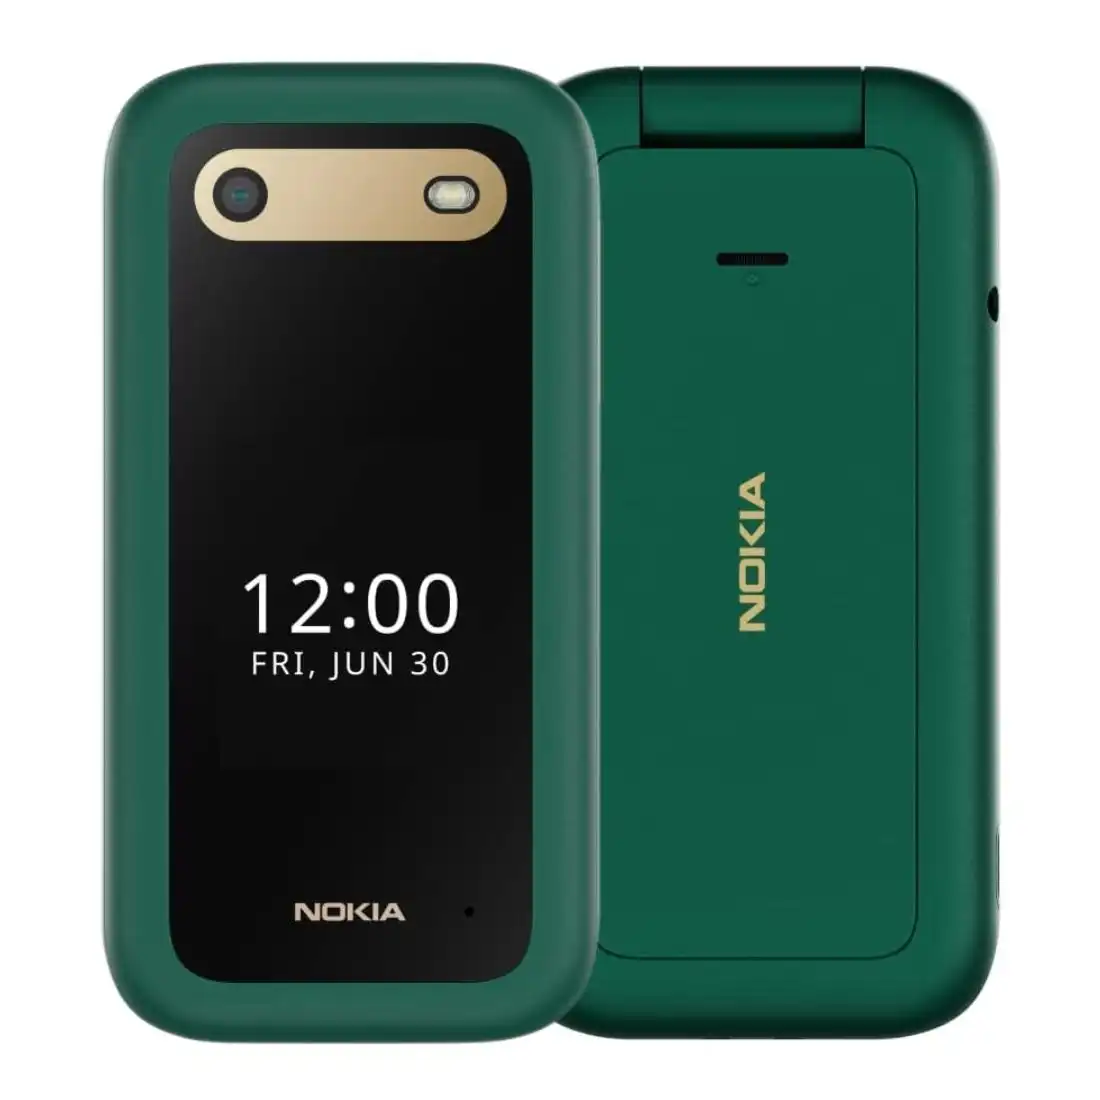 Nokia 2660 Flip (Dual Sim, 2.8 inches, 32GB, 4G) - Lush Green